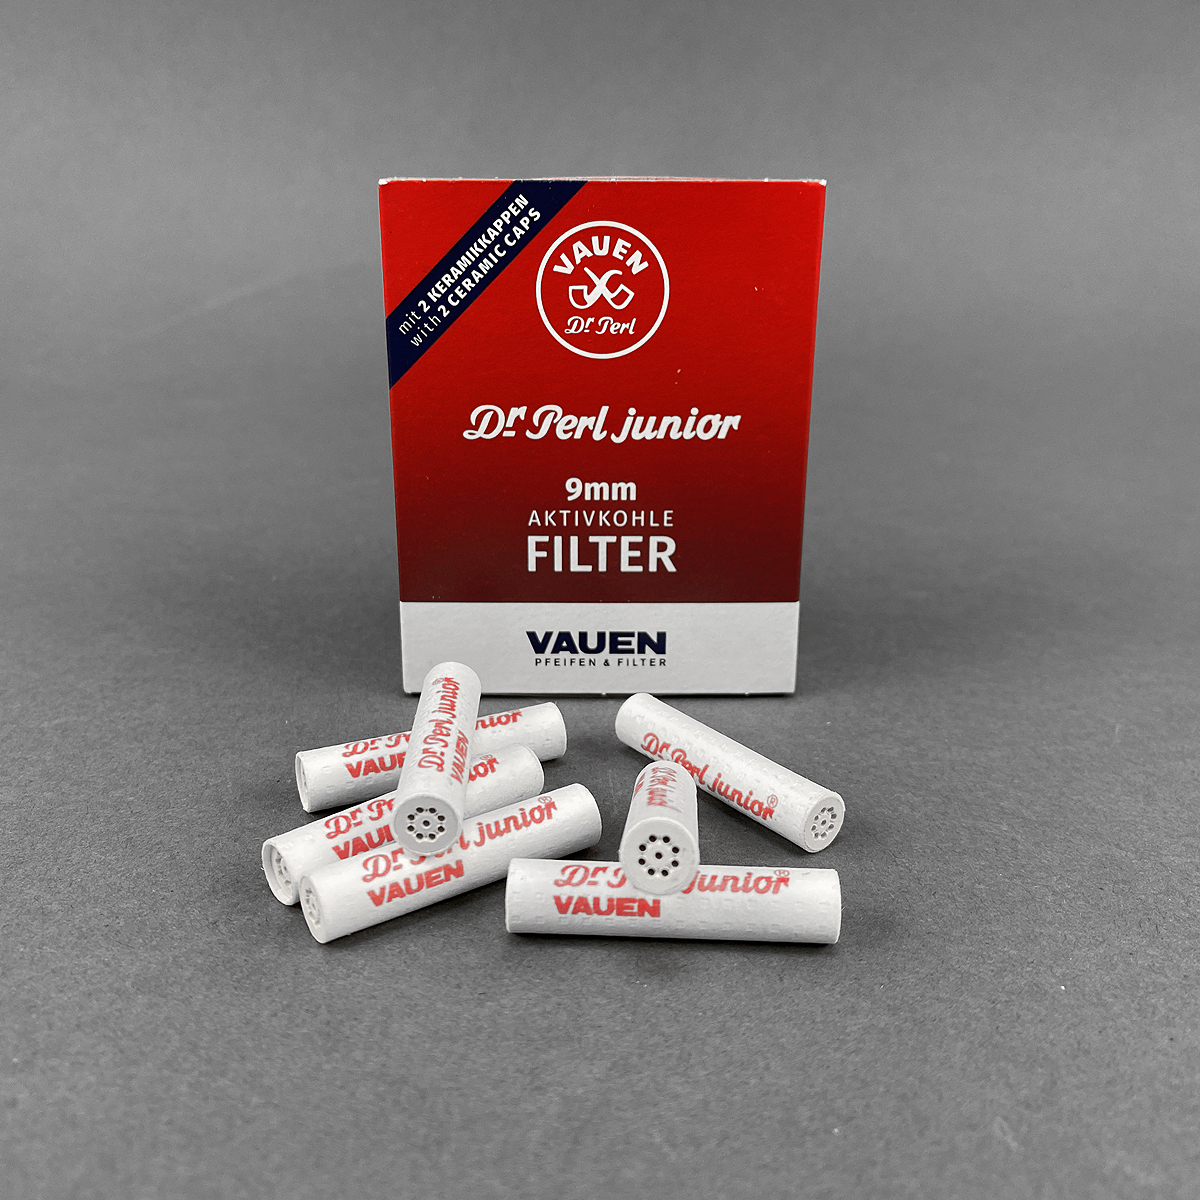 Gizeh ACTIVE Filter 8 mm, 10er, Filter 7/8 mm, Aktivkohle & Meerschaum, Headshop